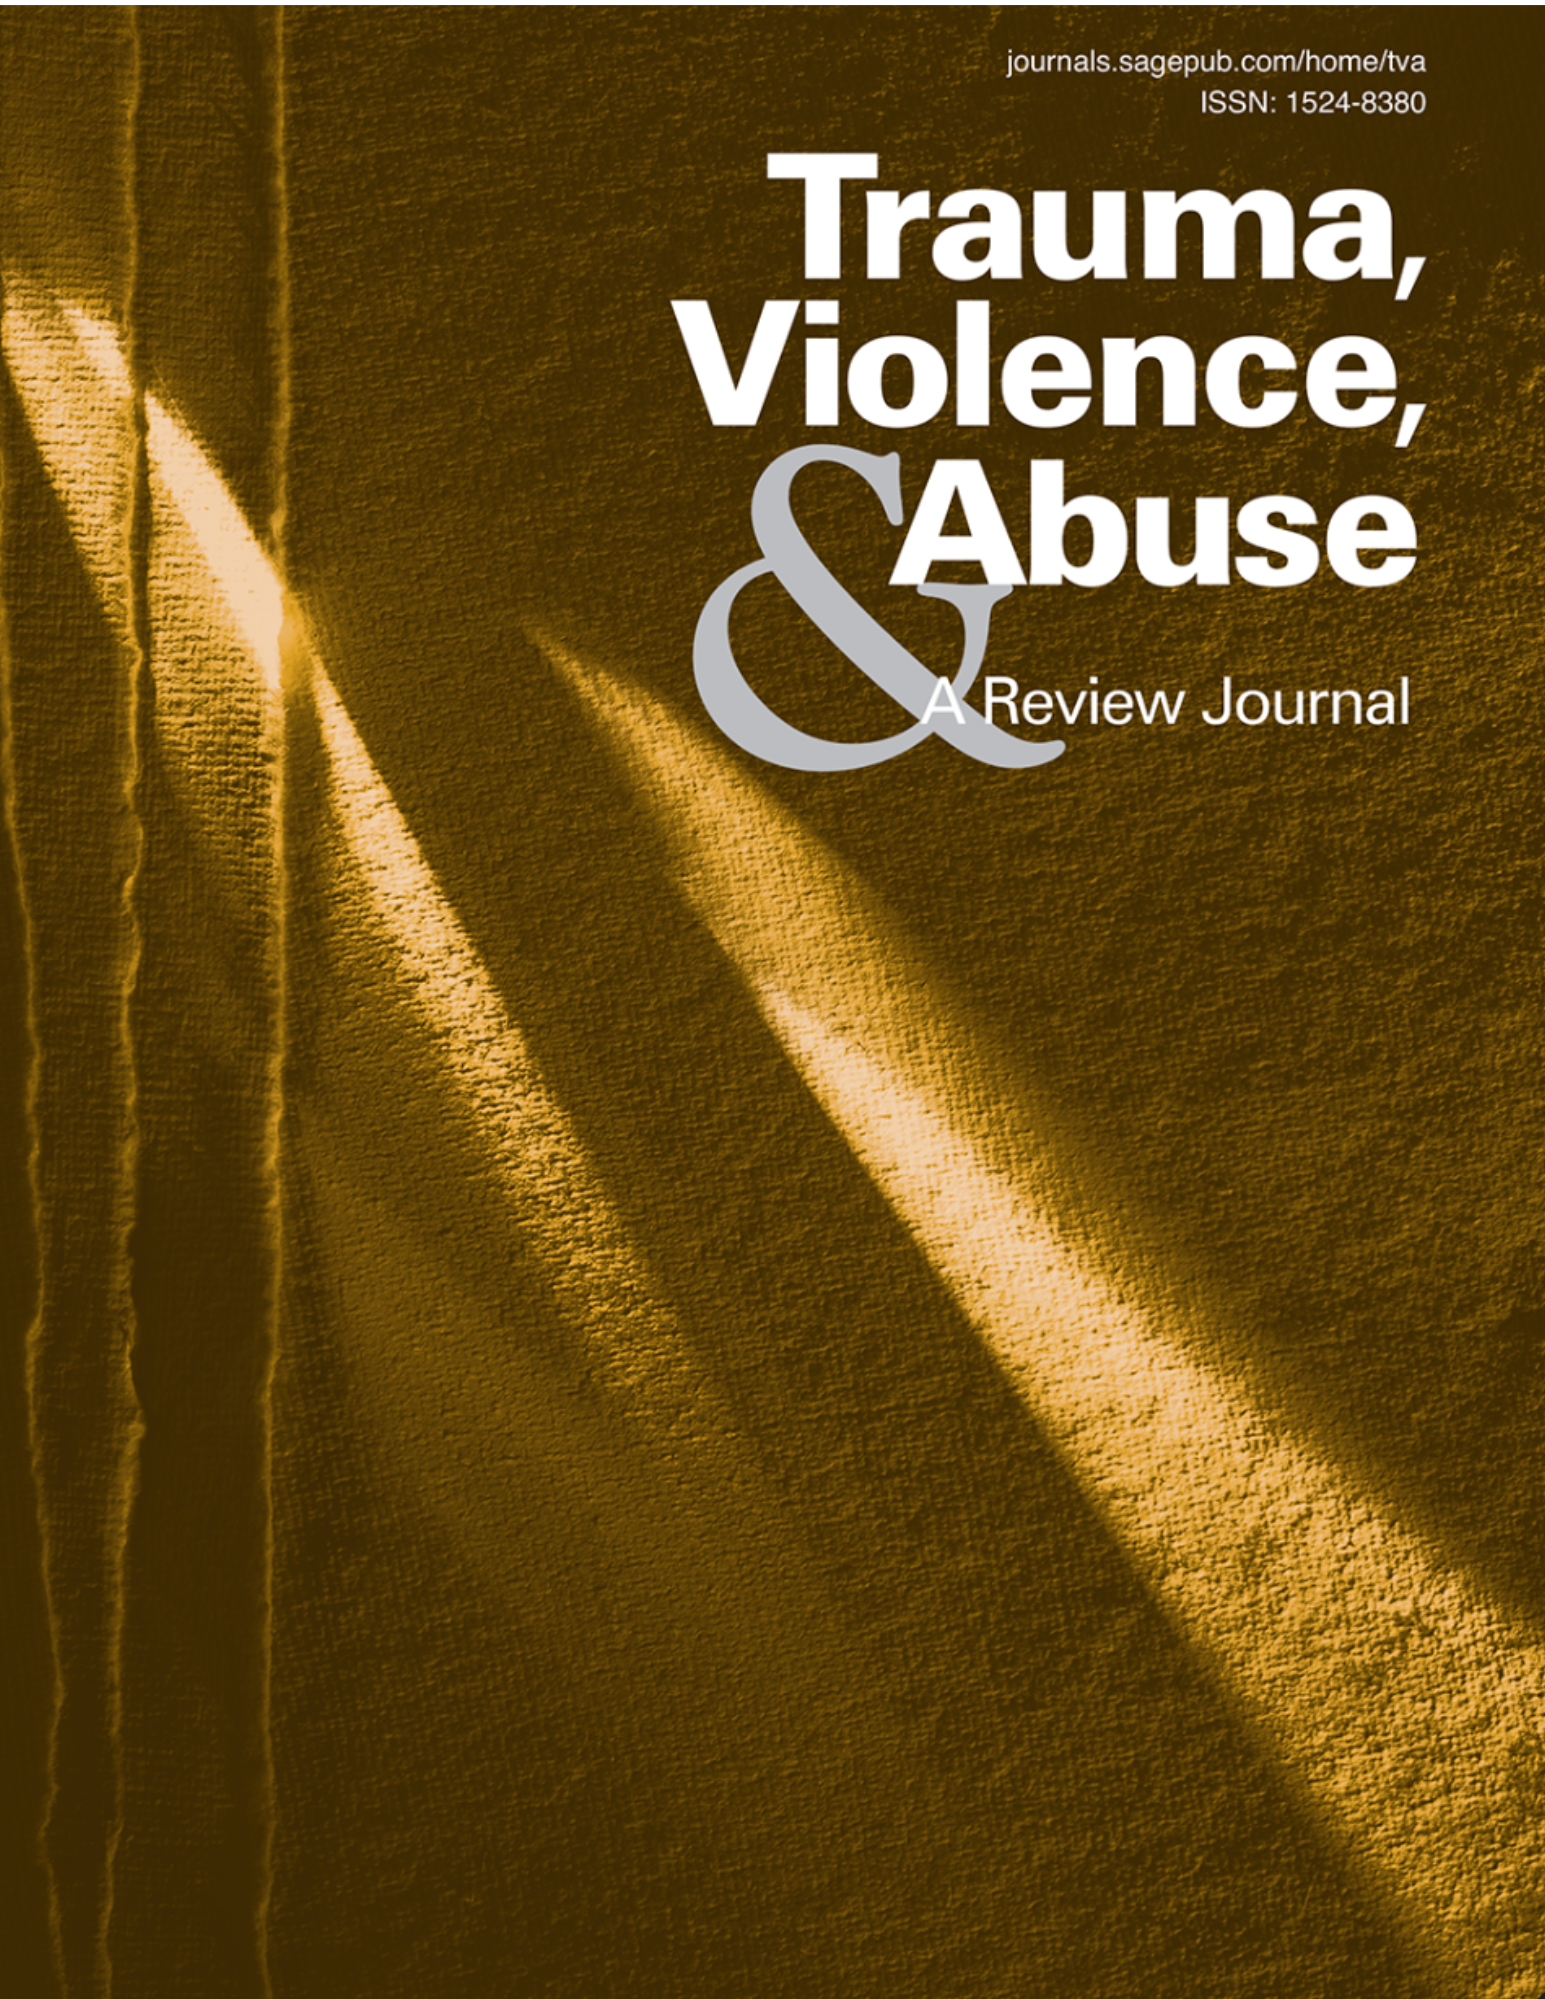 Trauma violence abuse journal